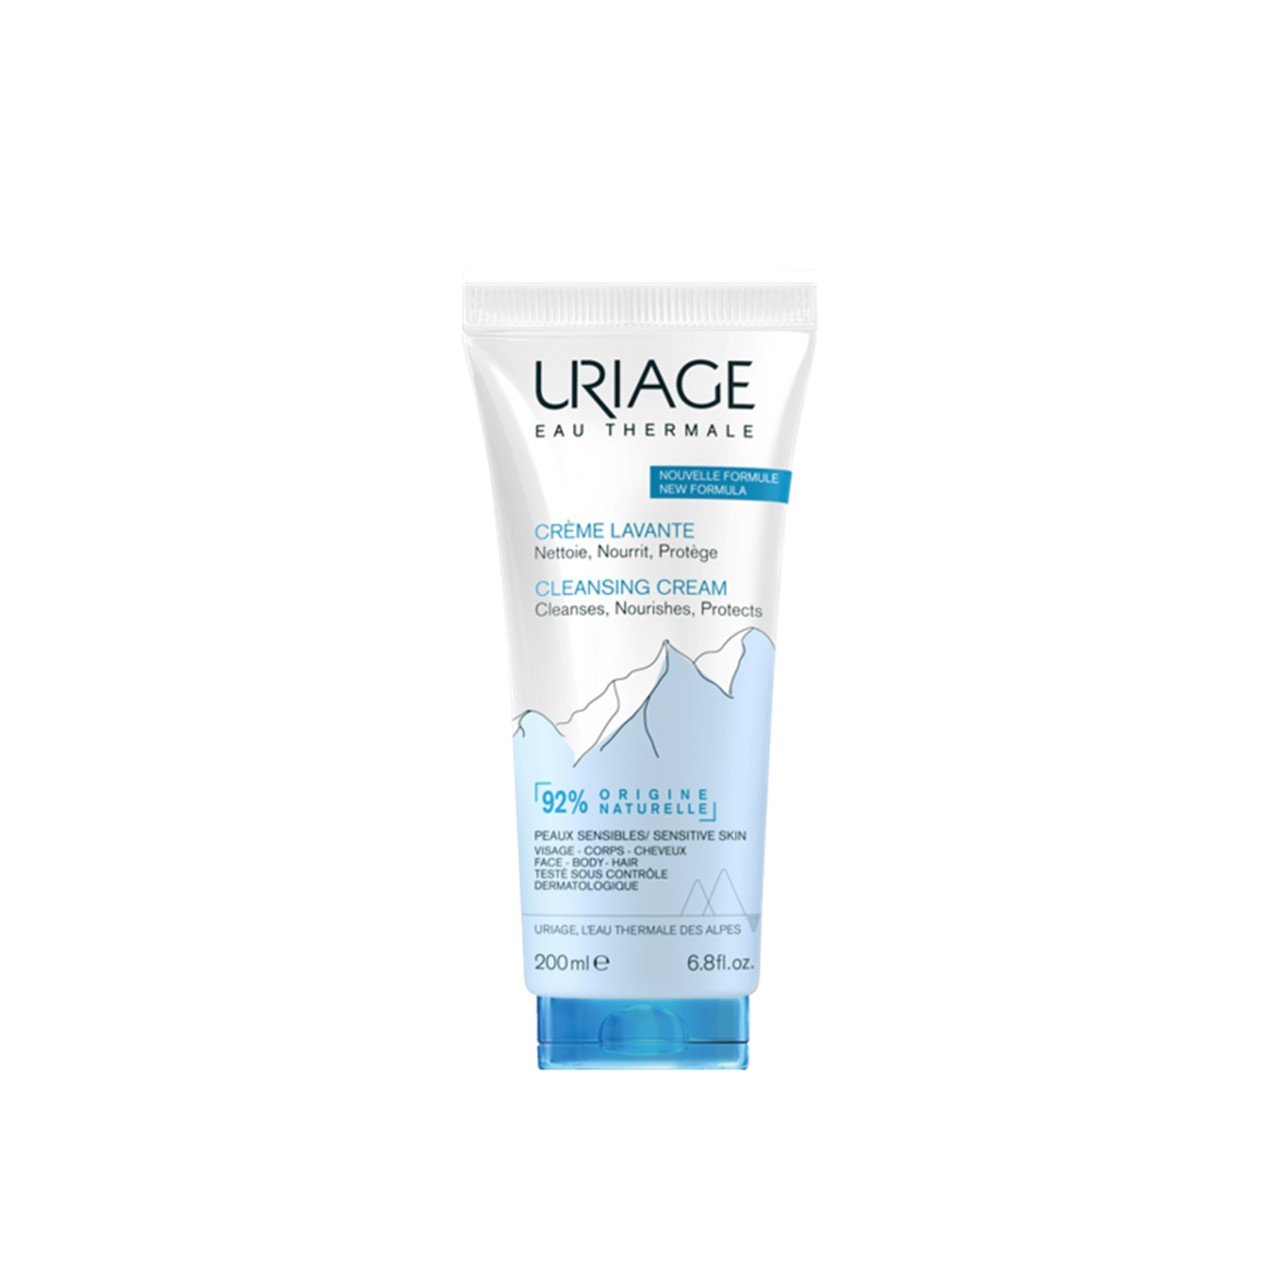 Uriage Cleansing Cream 200ml (6.76fl oz)